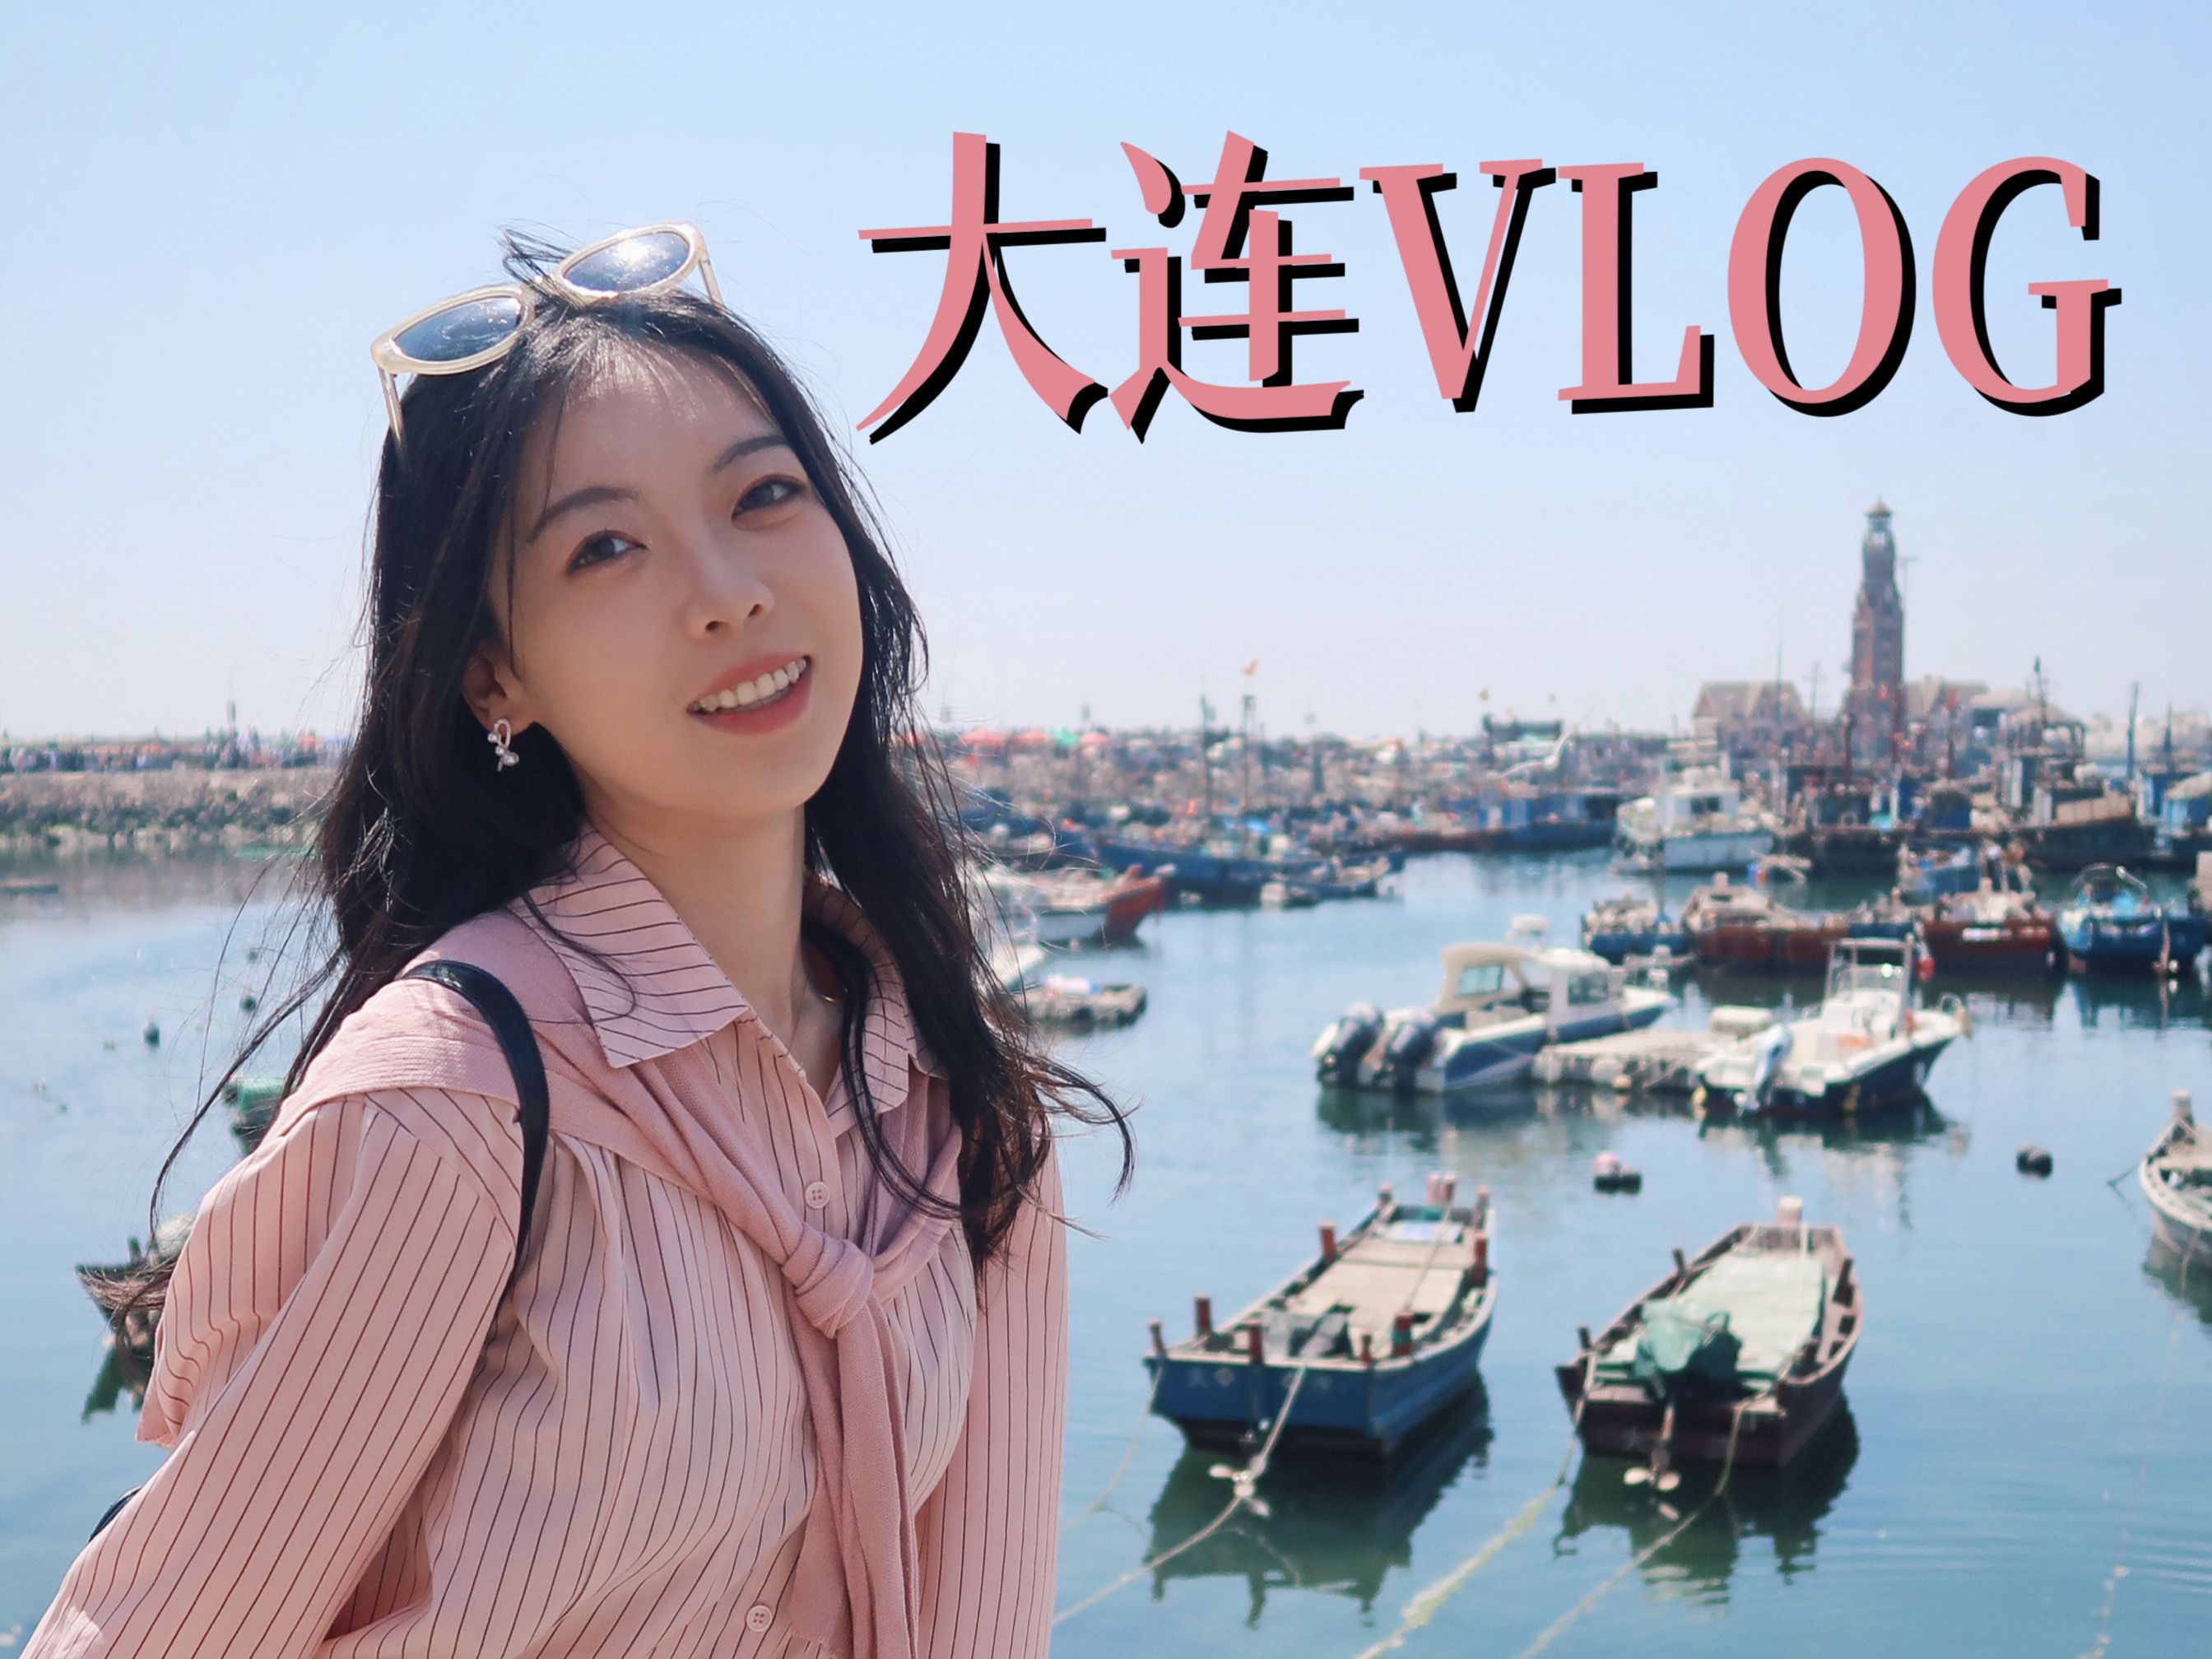 zncu's vlog#54 | 五一假期大连3天2晚 | 在桃源市场实现海鲜自由 | 晨曦沙滩 |